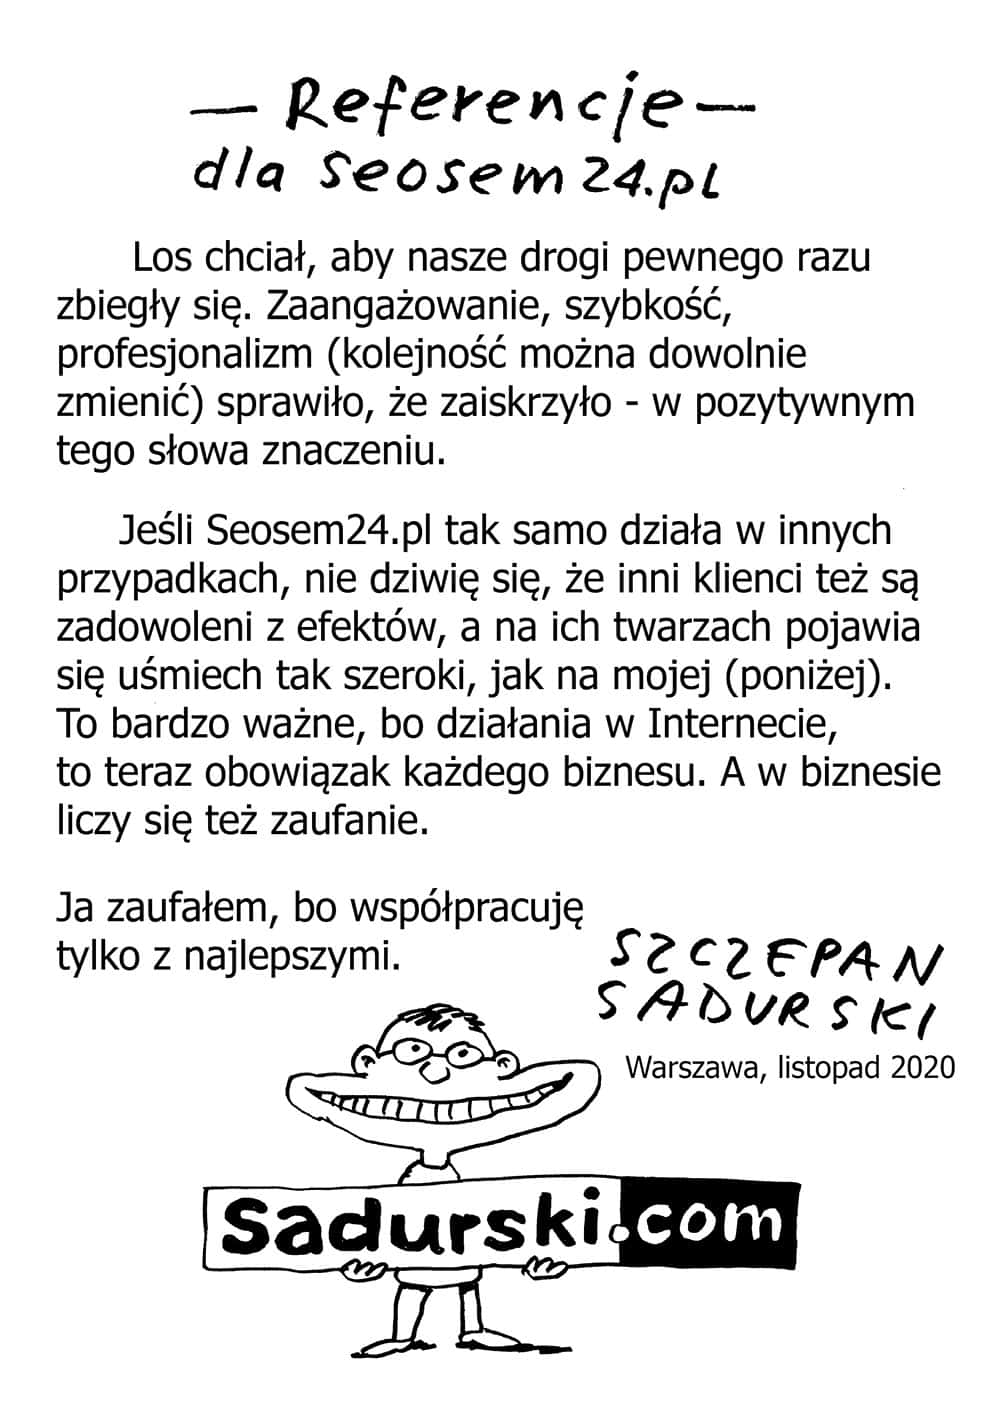 Szymon Sadurski - referencje dla seosem24